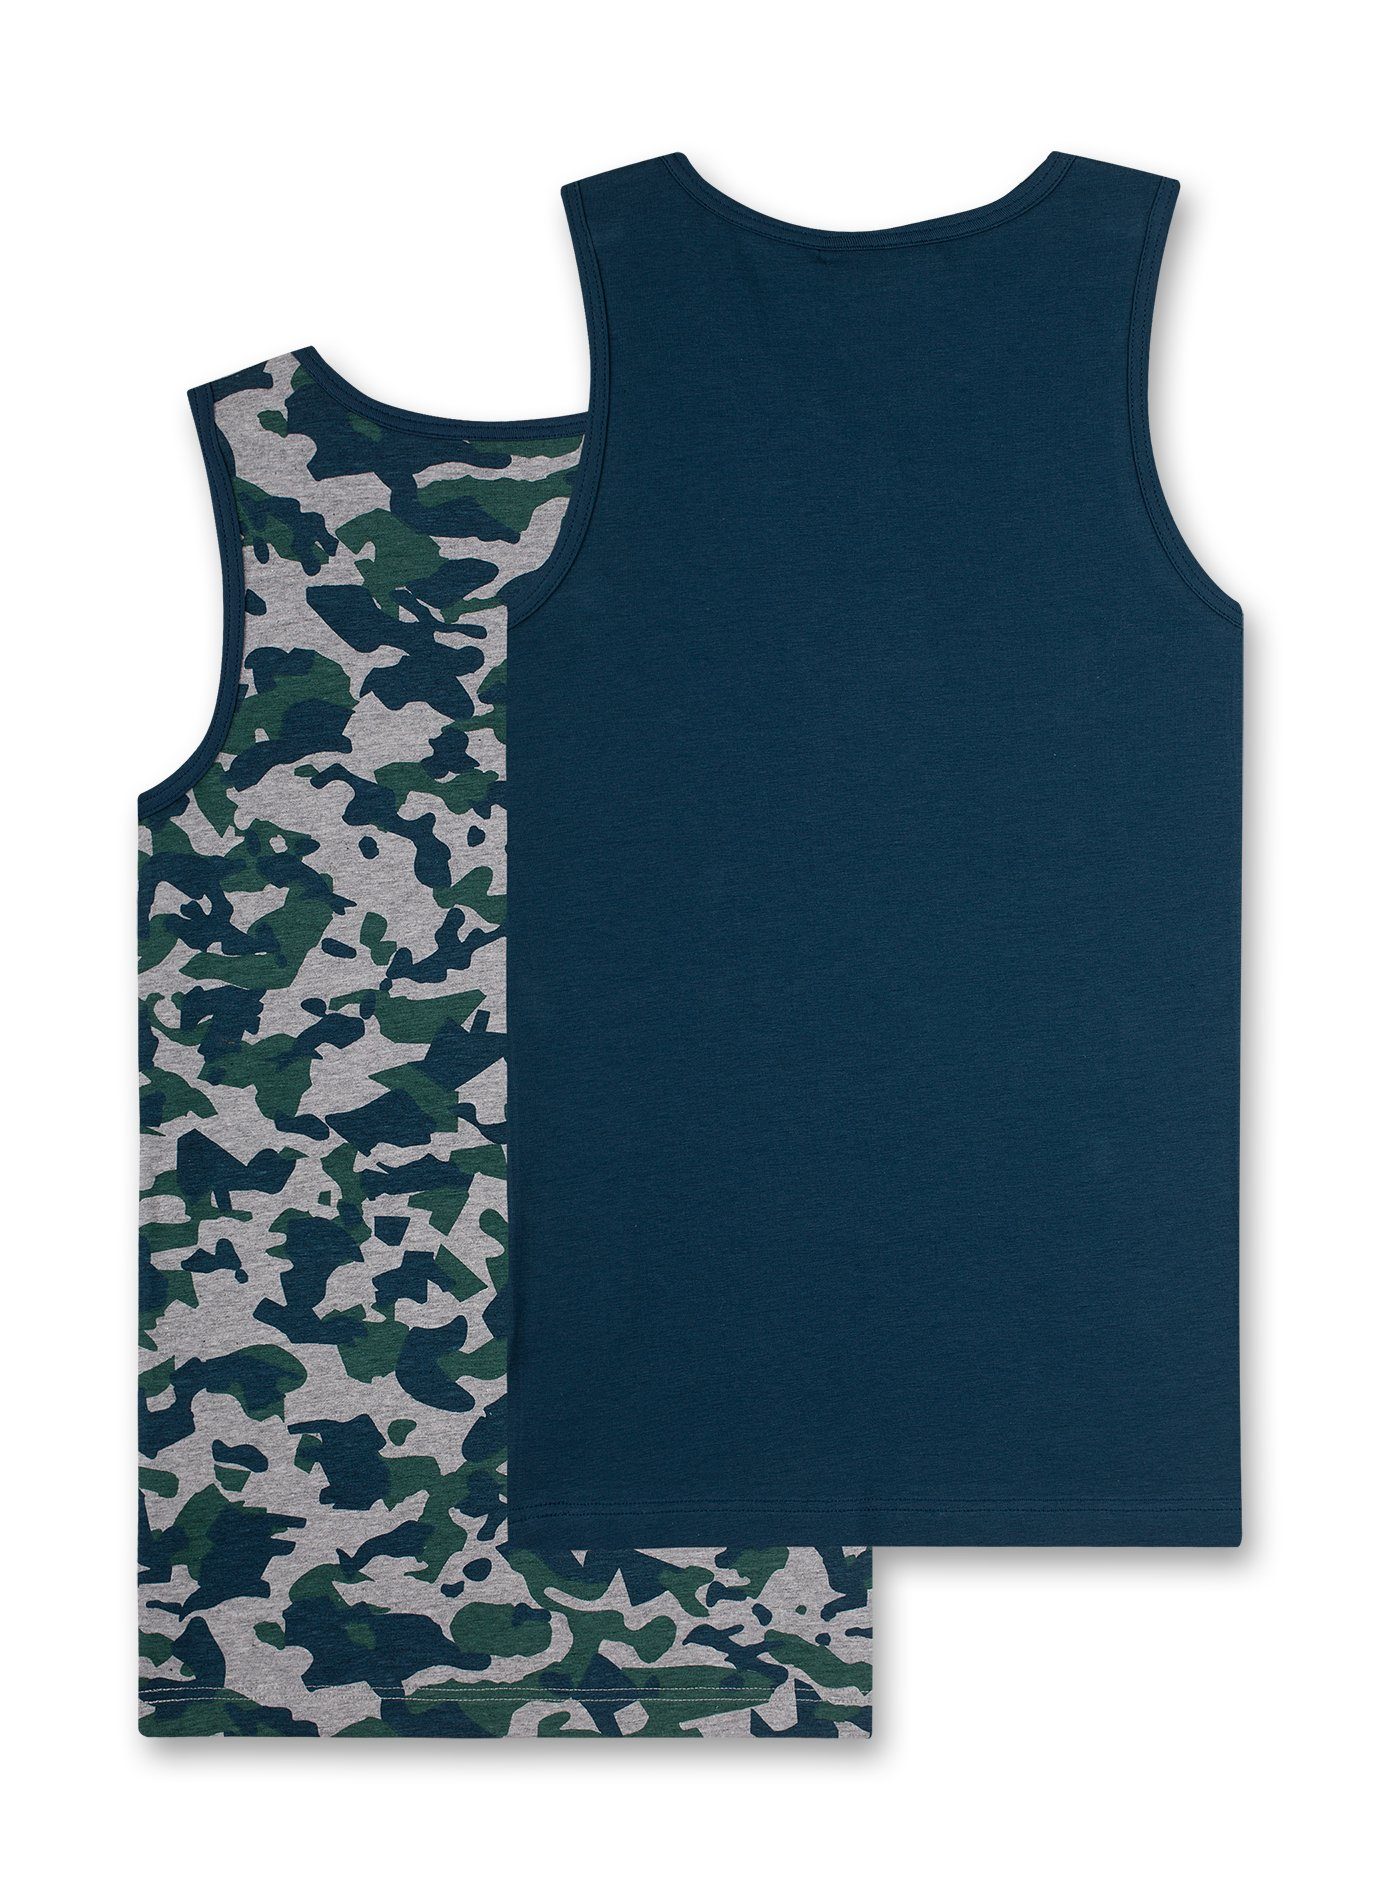 Hemd camouflage s.Oliver Unterhemd 2-St) blau grün Unterhemd Jungen Junior 2er s.Oliver Pack (Doppelpack,